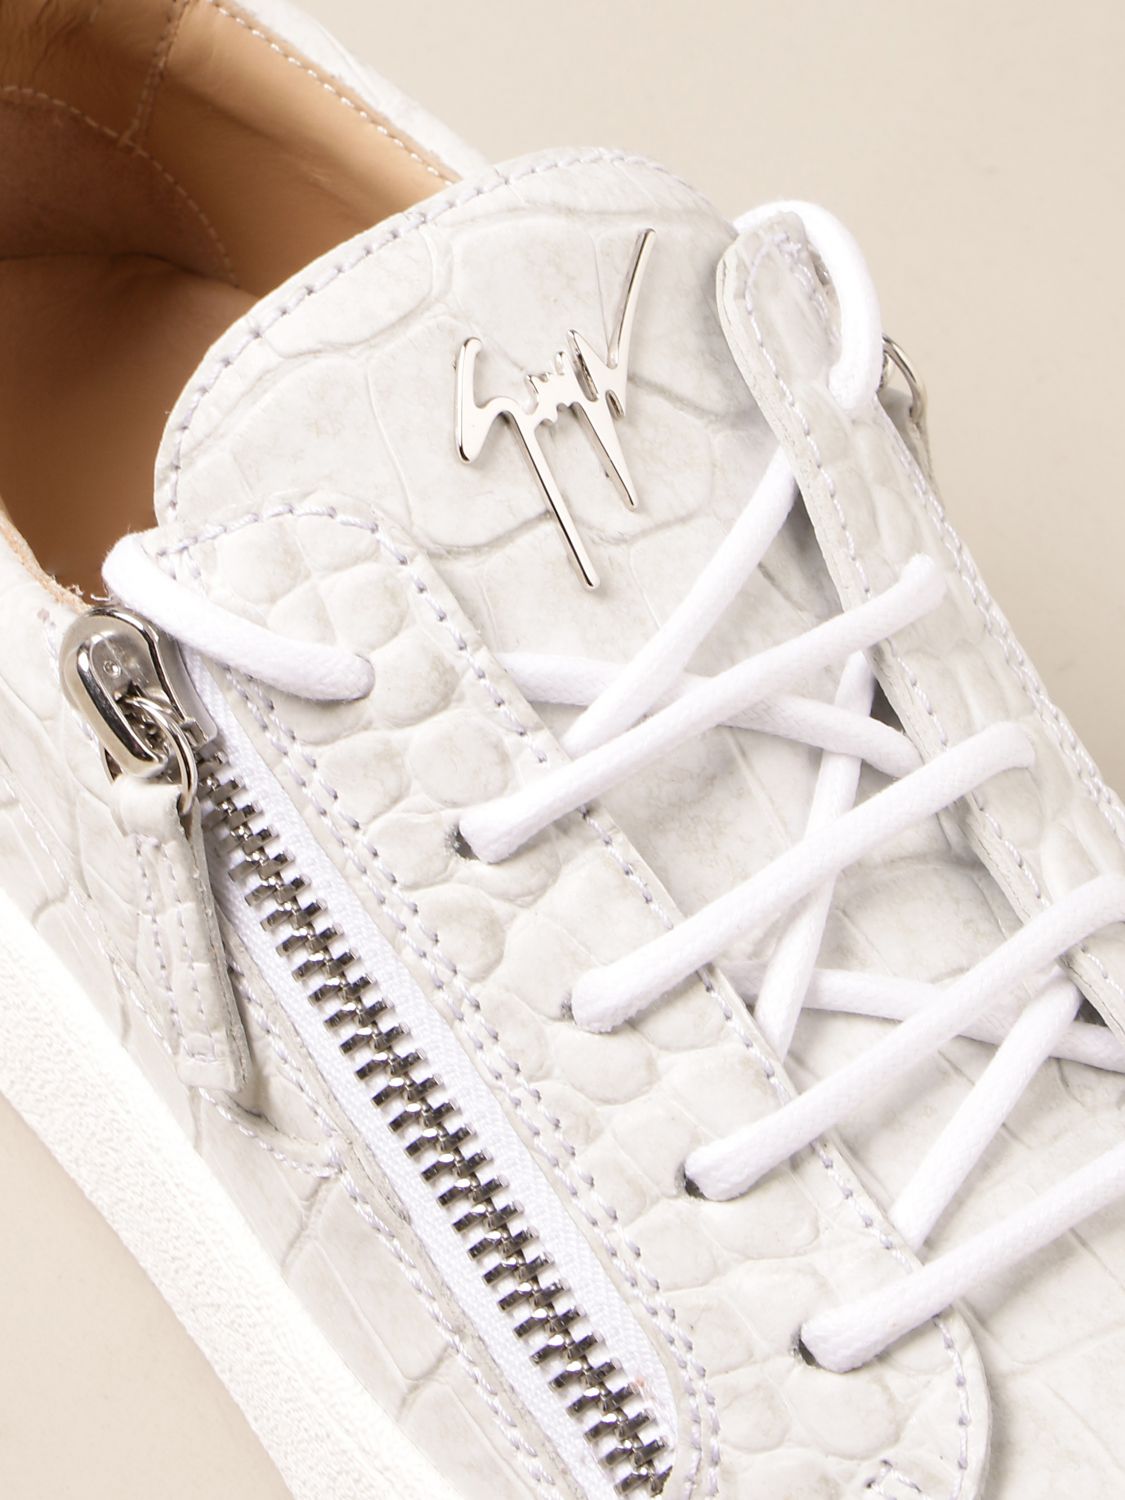 GIUSEPPE ZANOTTI DESIGN: sneakers in crocodile print leather | Sneakers Giuseppe Zanotti Design Women White Sneakers Zanotti Design RW00017 GIGLIO.COM